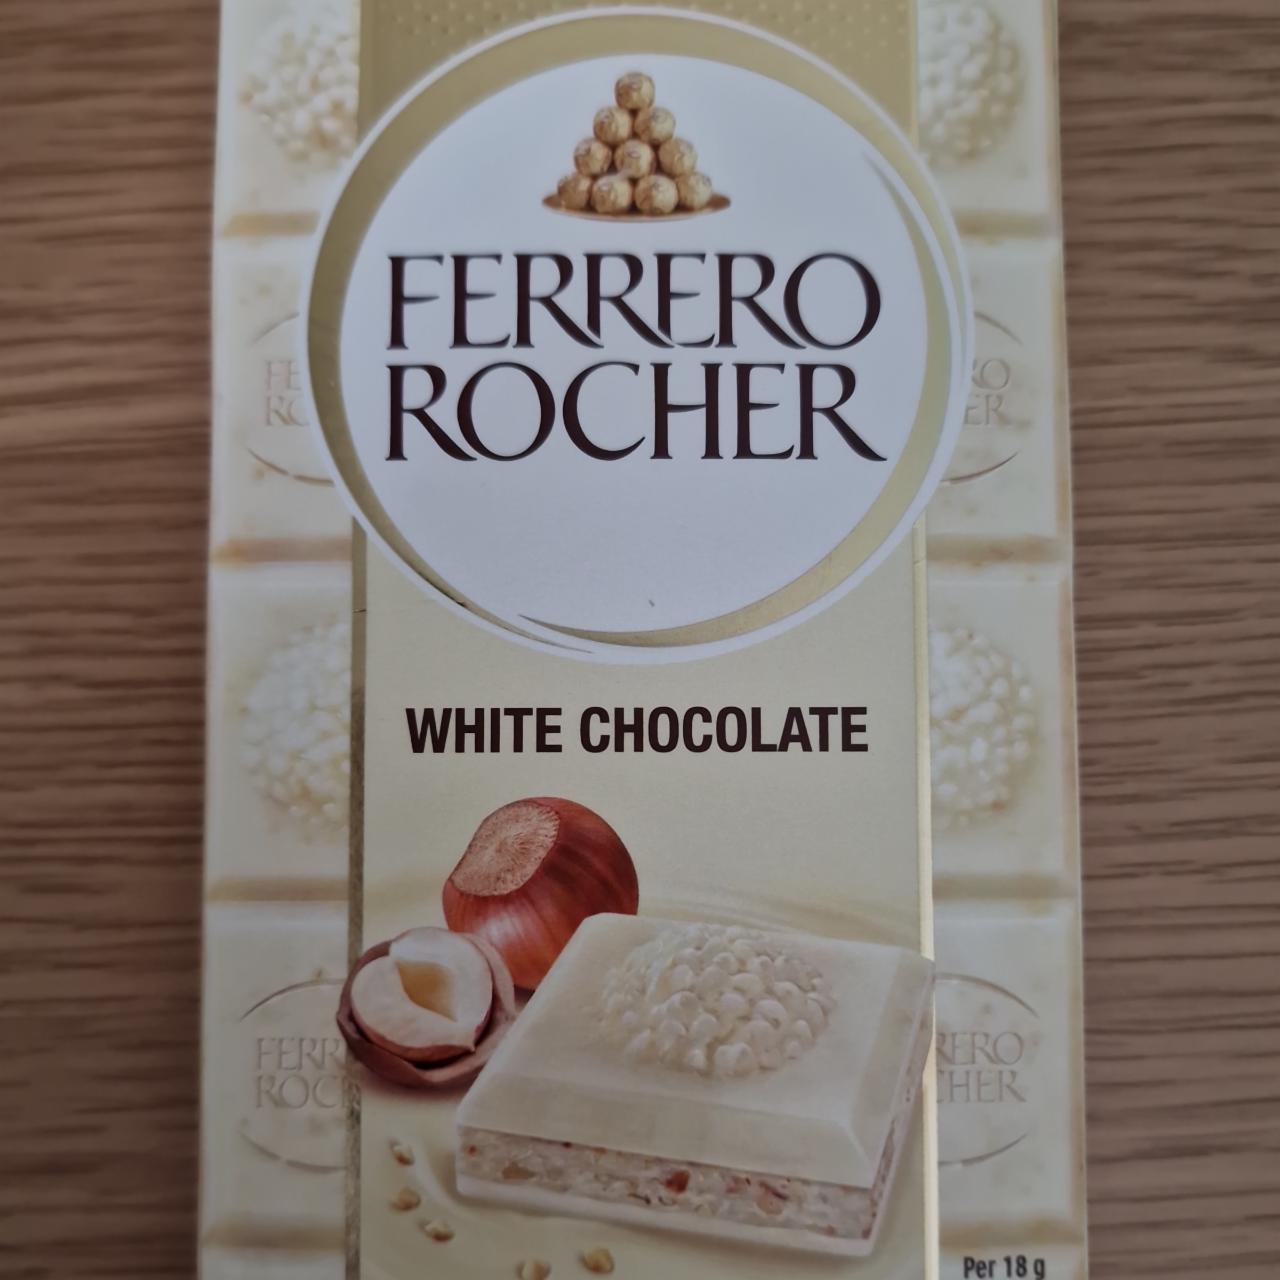 Képek - Ferrero Rocher white hazelnut